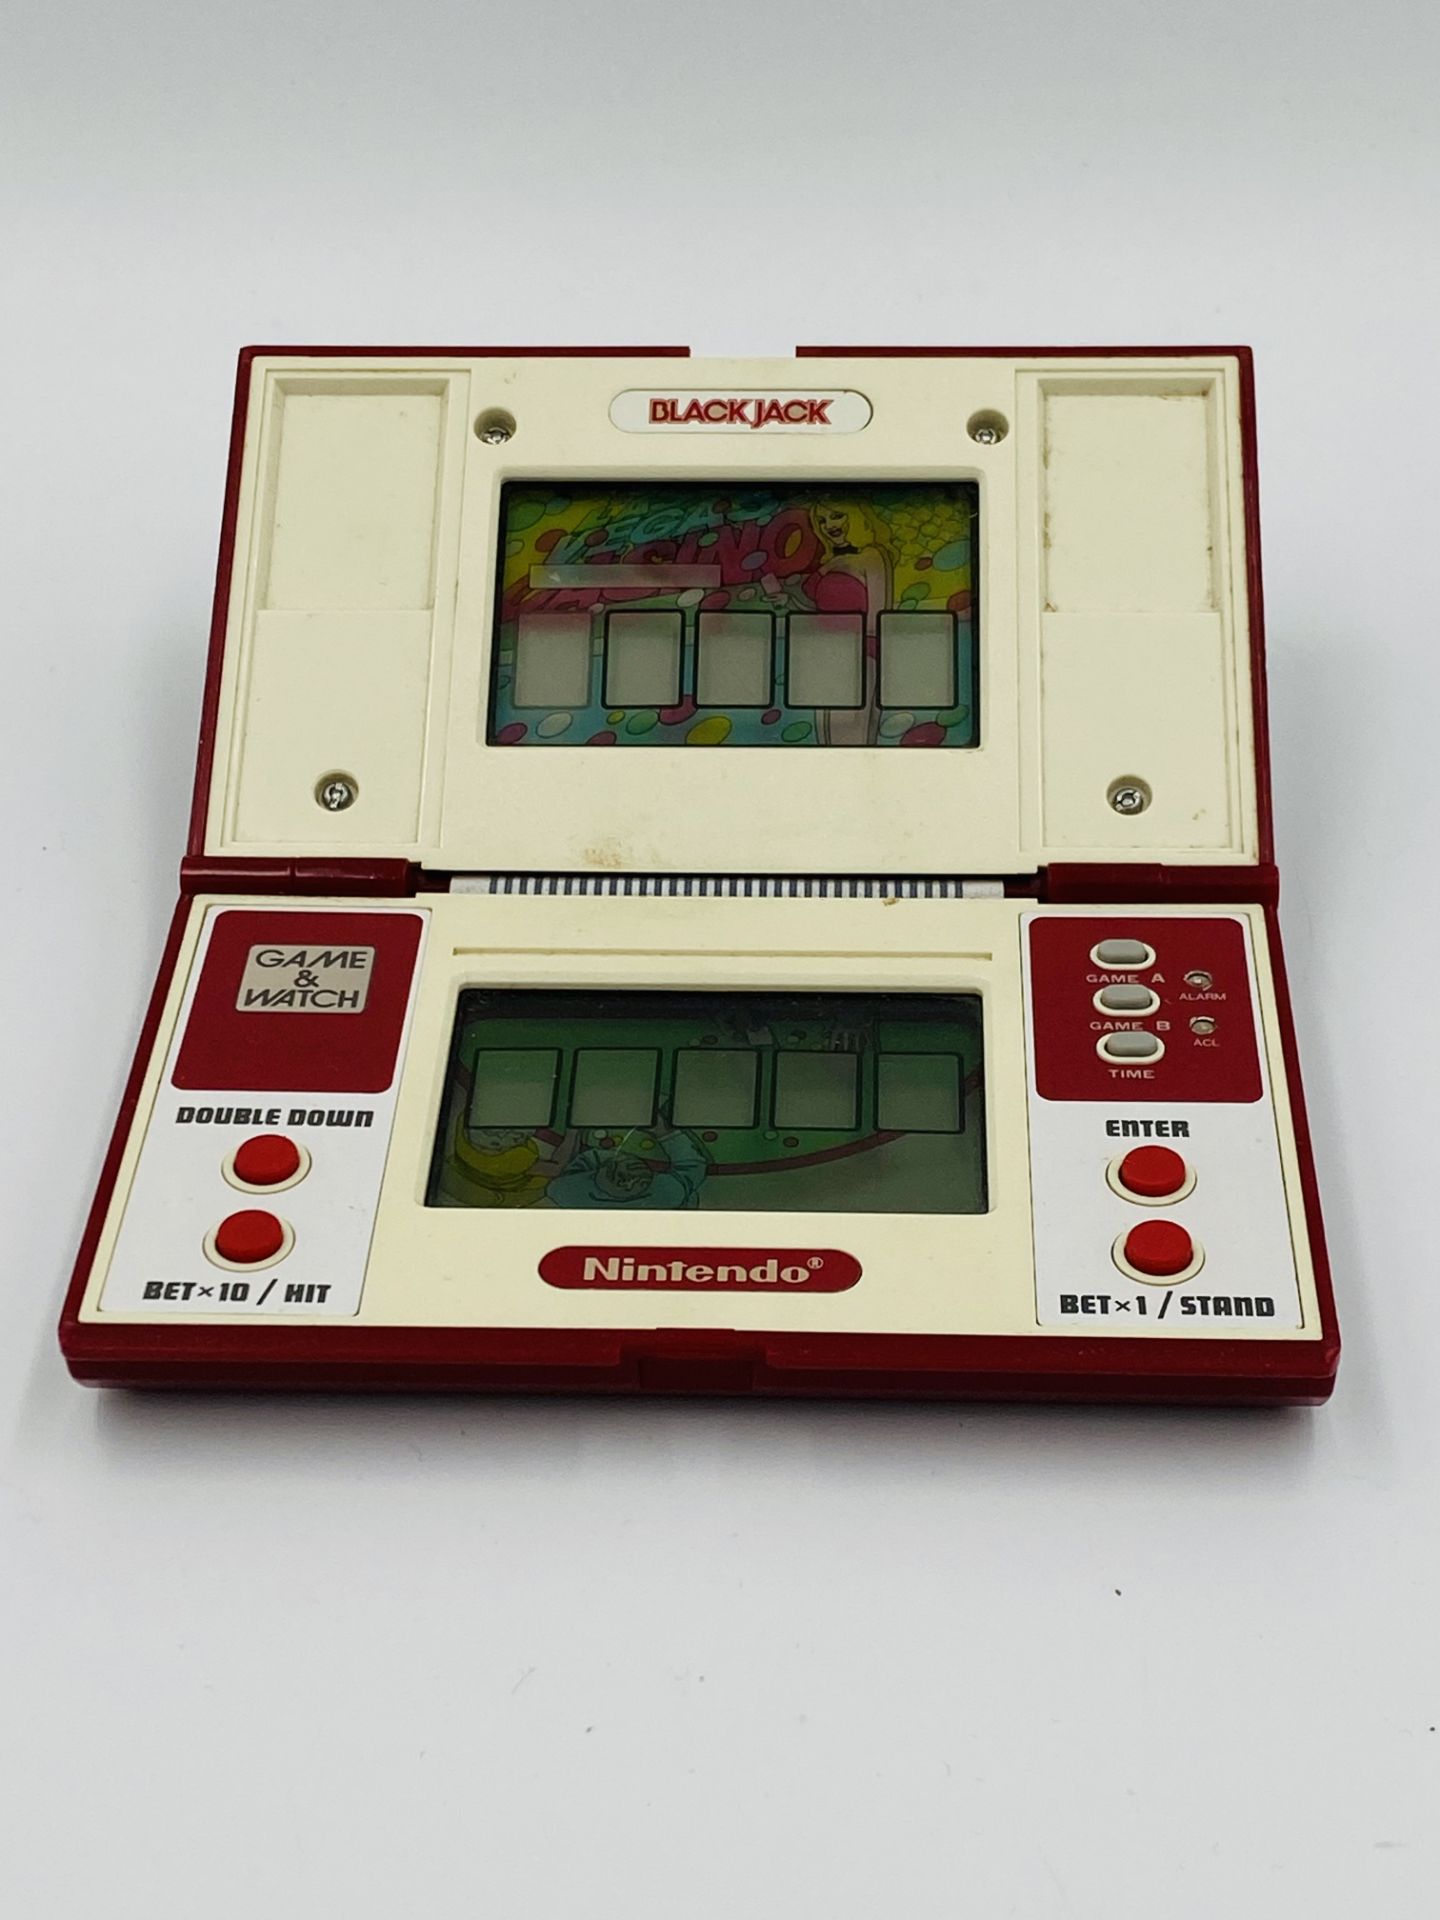 Nintendo Game & Watch Blackjack, model BJ-60 - Image 3 of 4